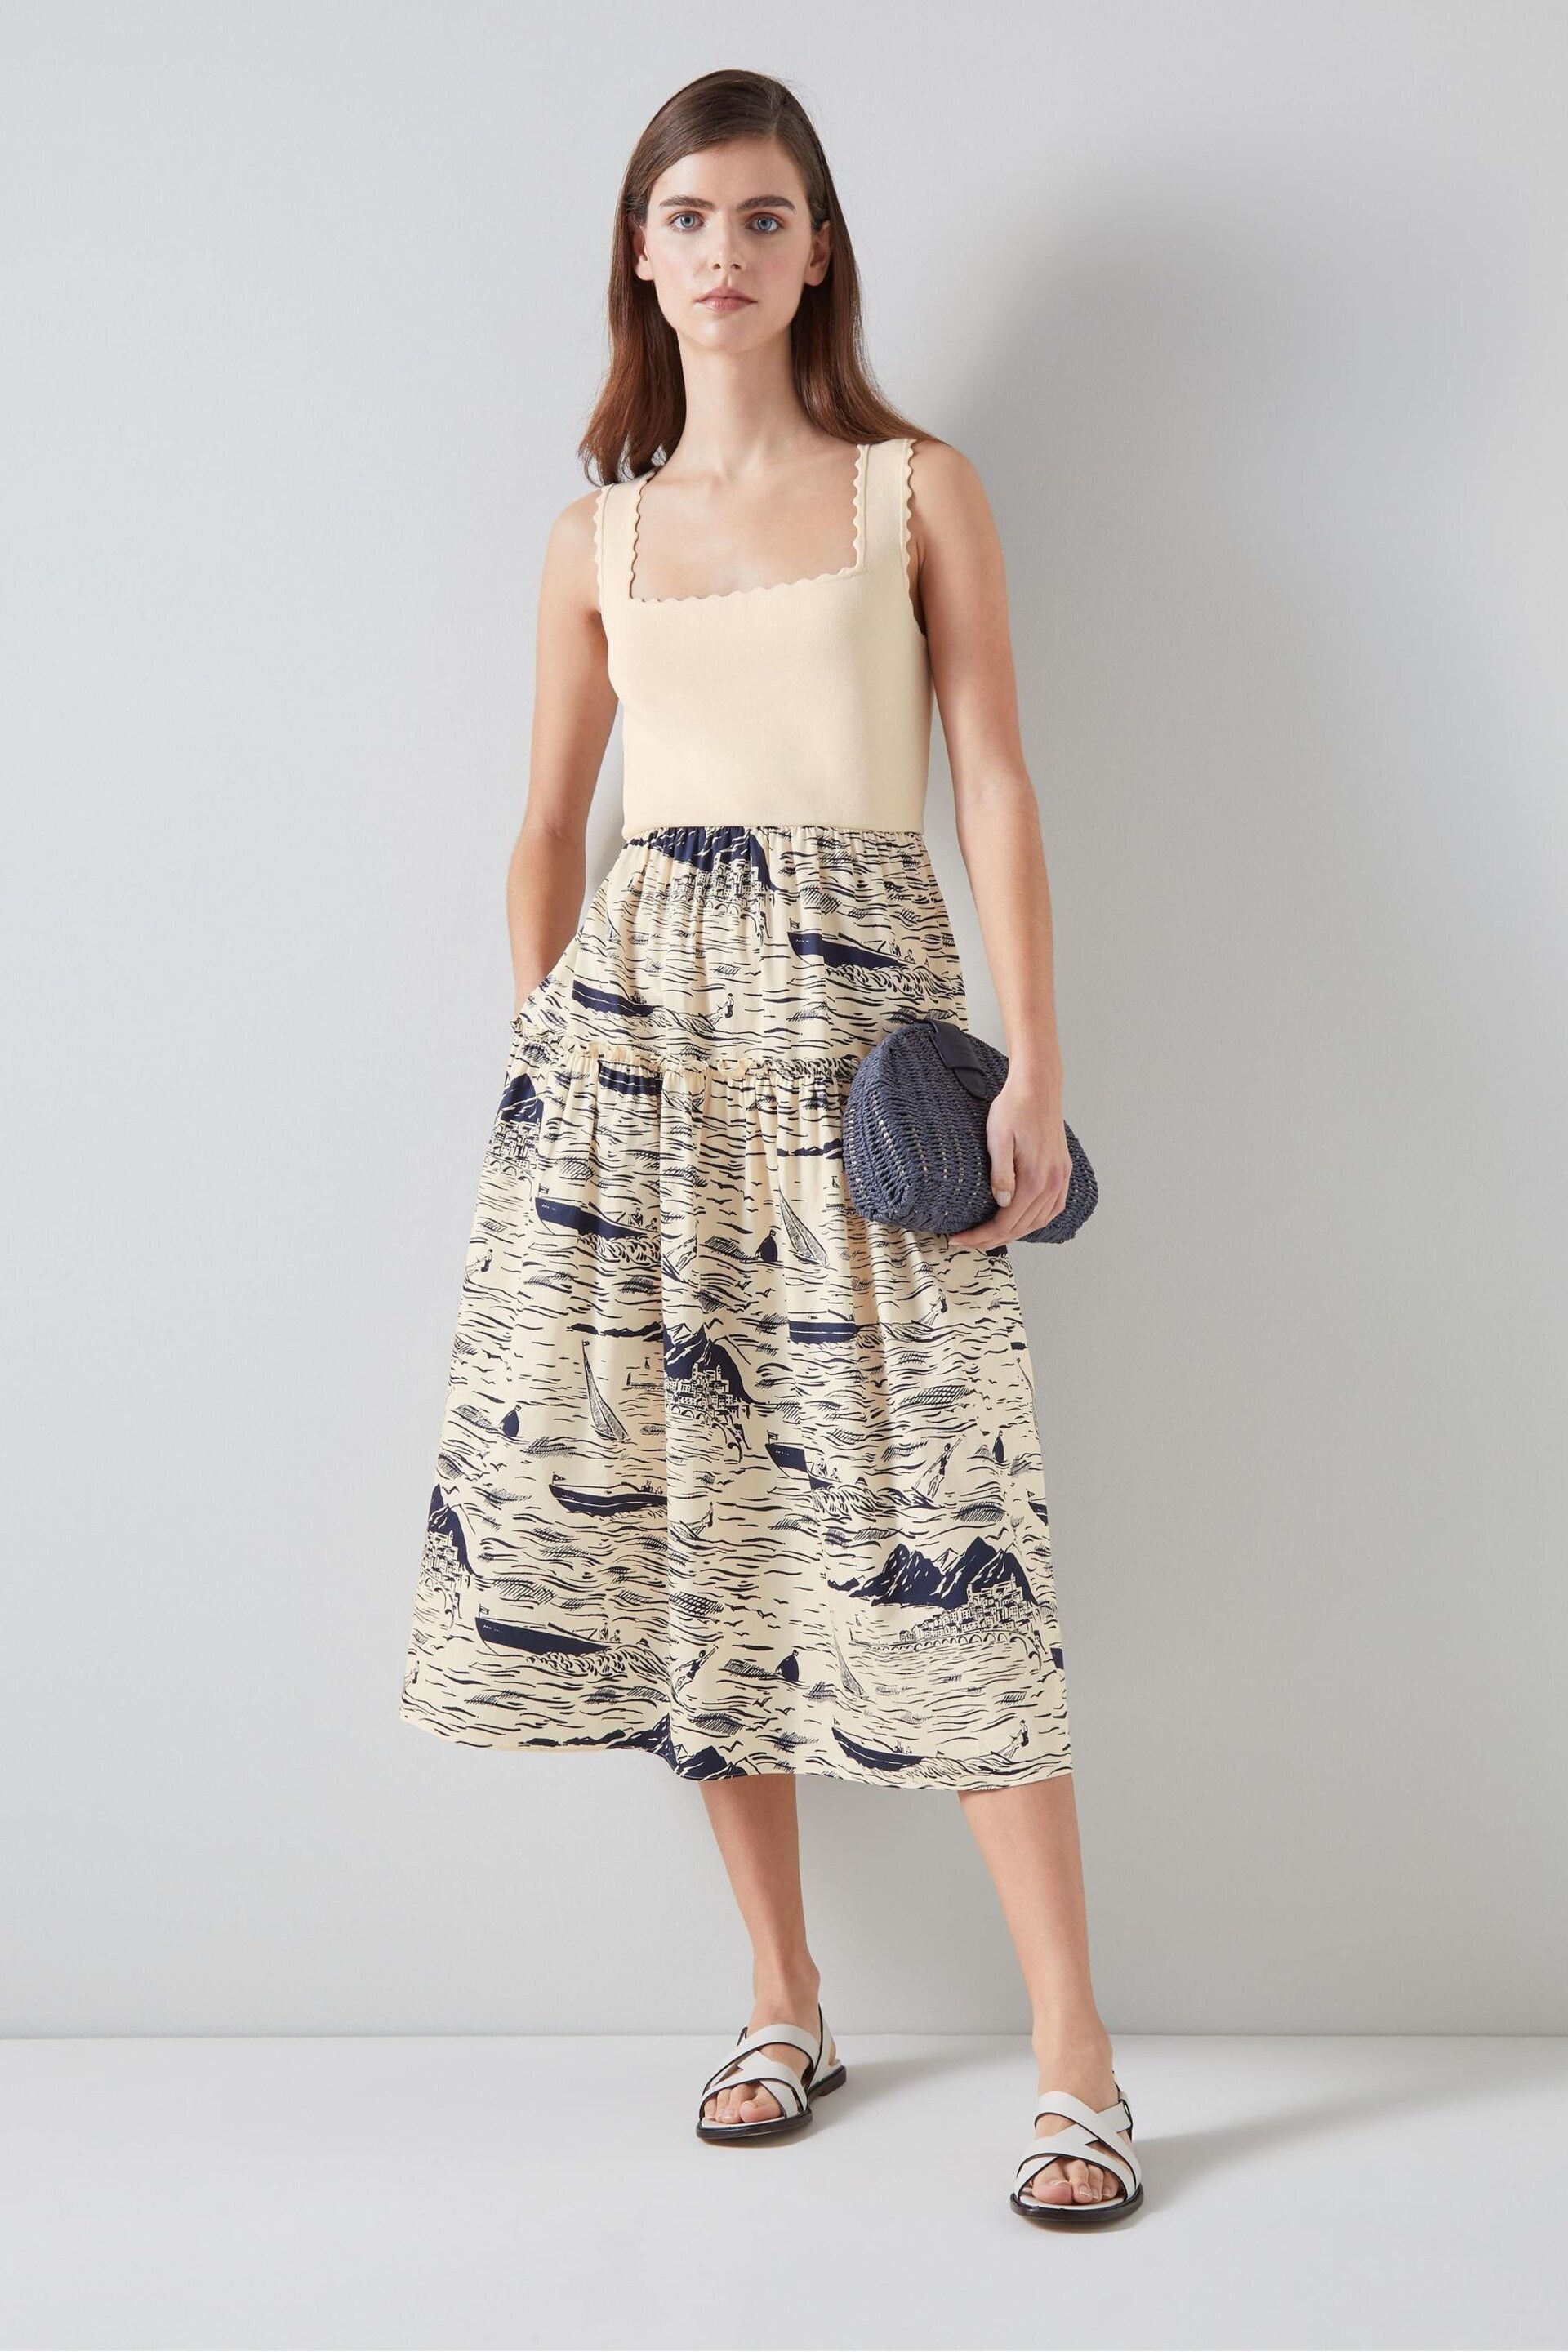 LK Bennett Crosby Cotton Blend Riviera Print Dress - Image 1 of 3